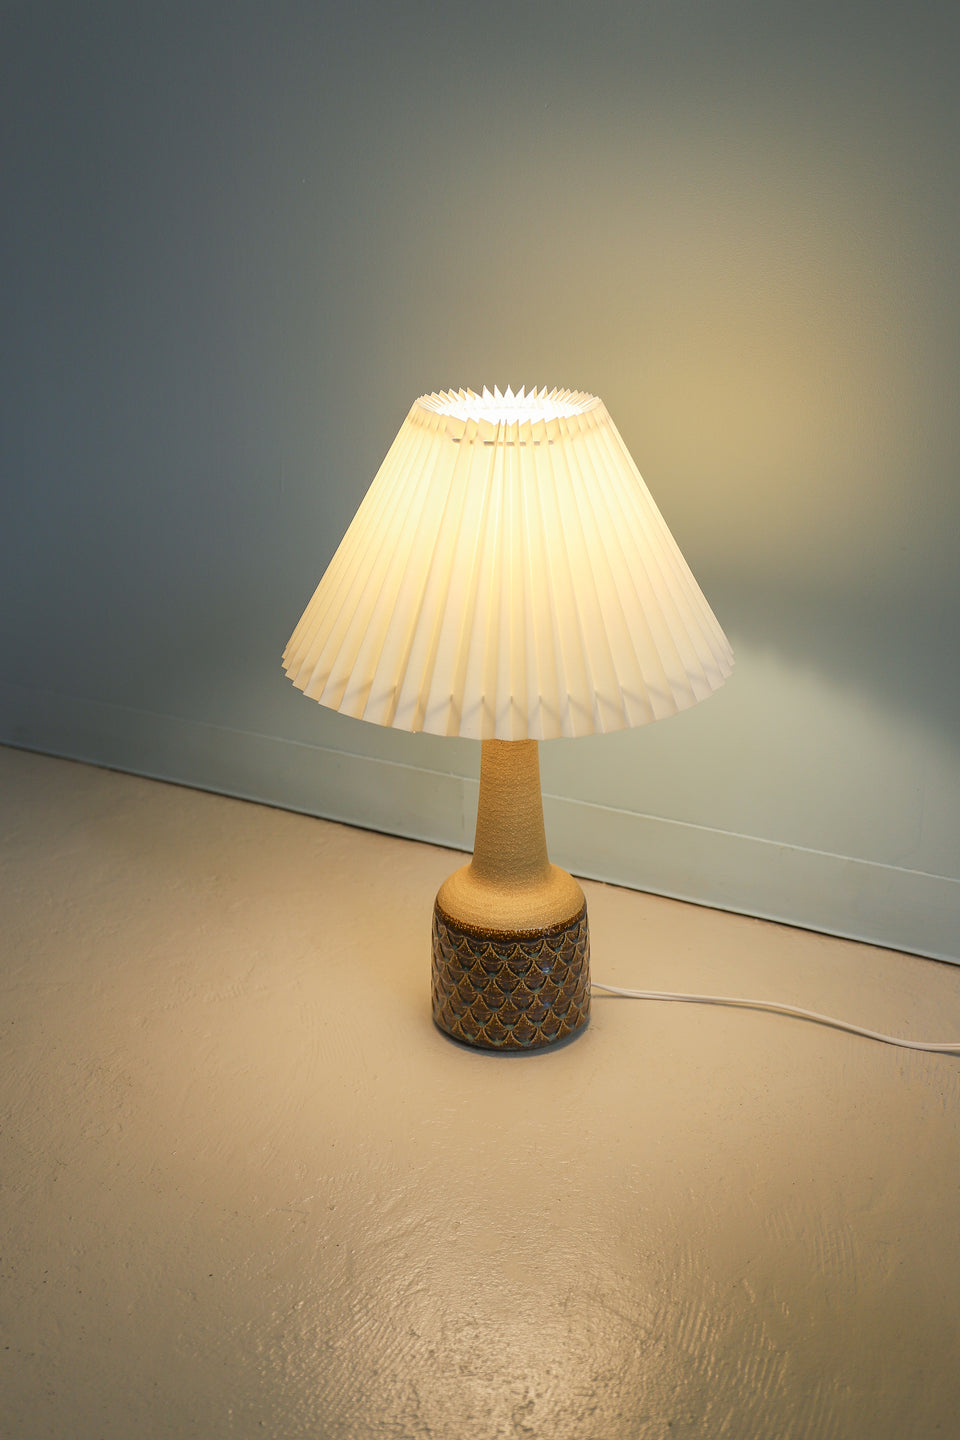 Søholm Table Lamp Einar Johansen Danish Vintage/デンマークヴィンテージ スーホルム テーブルランプ エイナー・ヨハンセン 間接照明 北欧インテリア